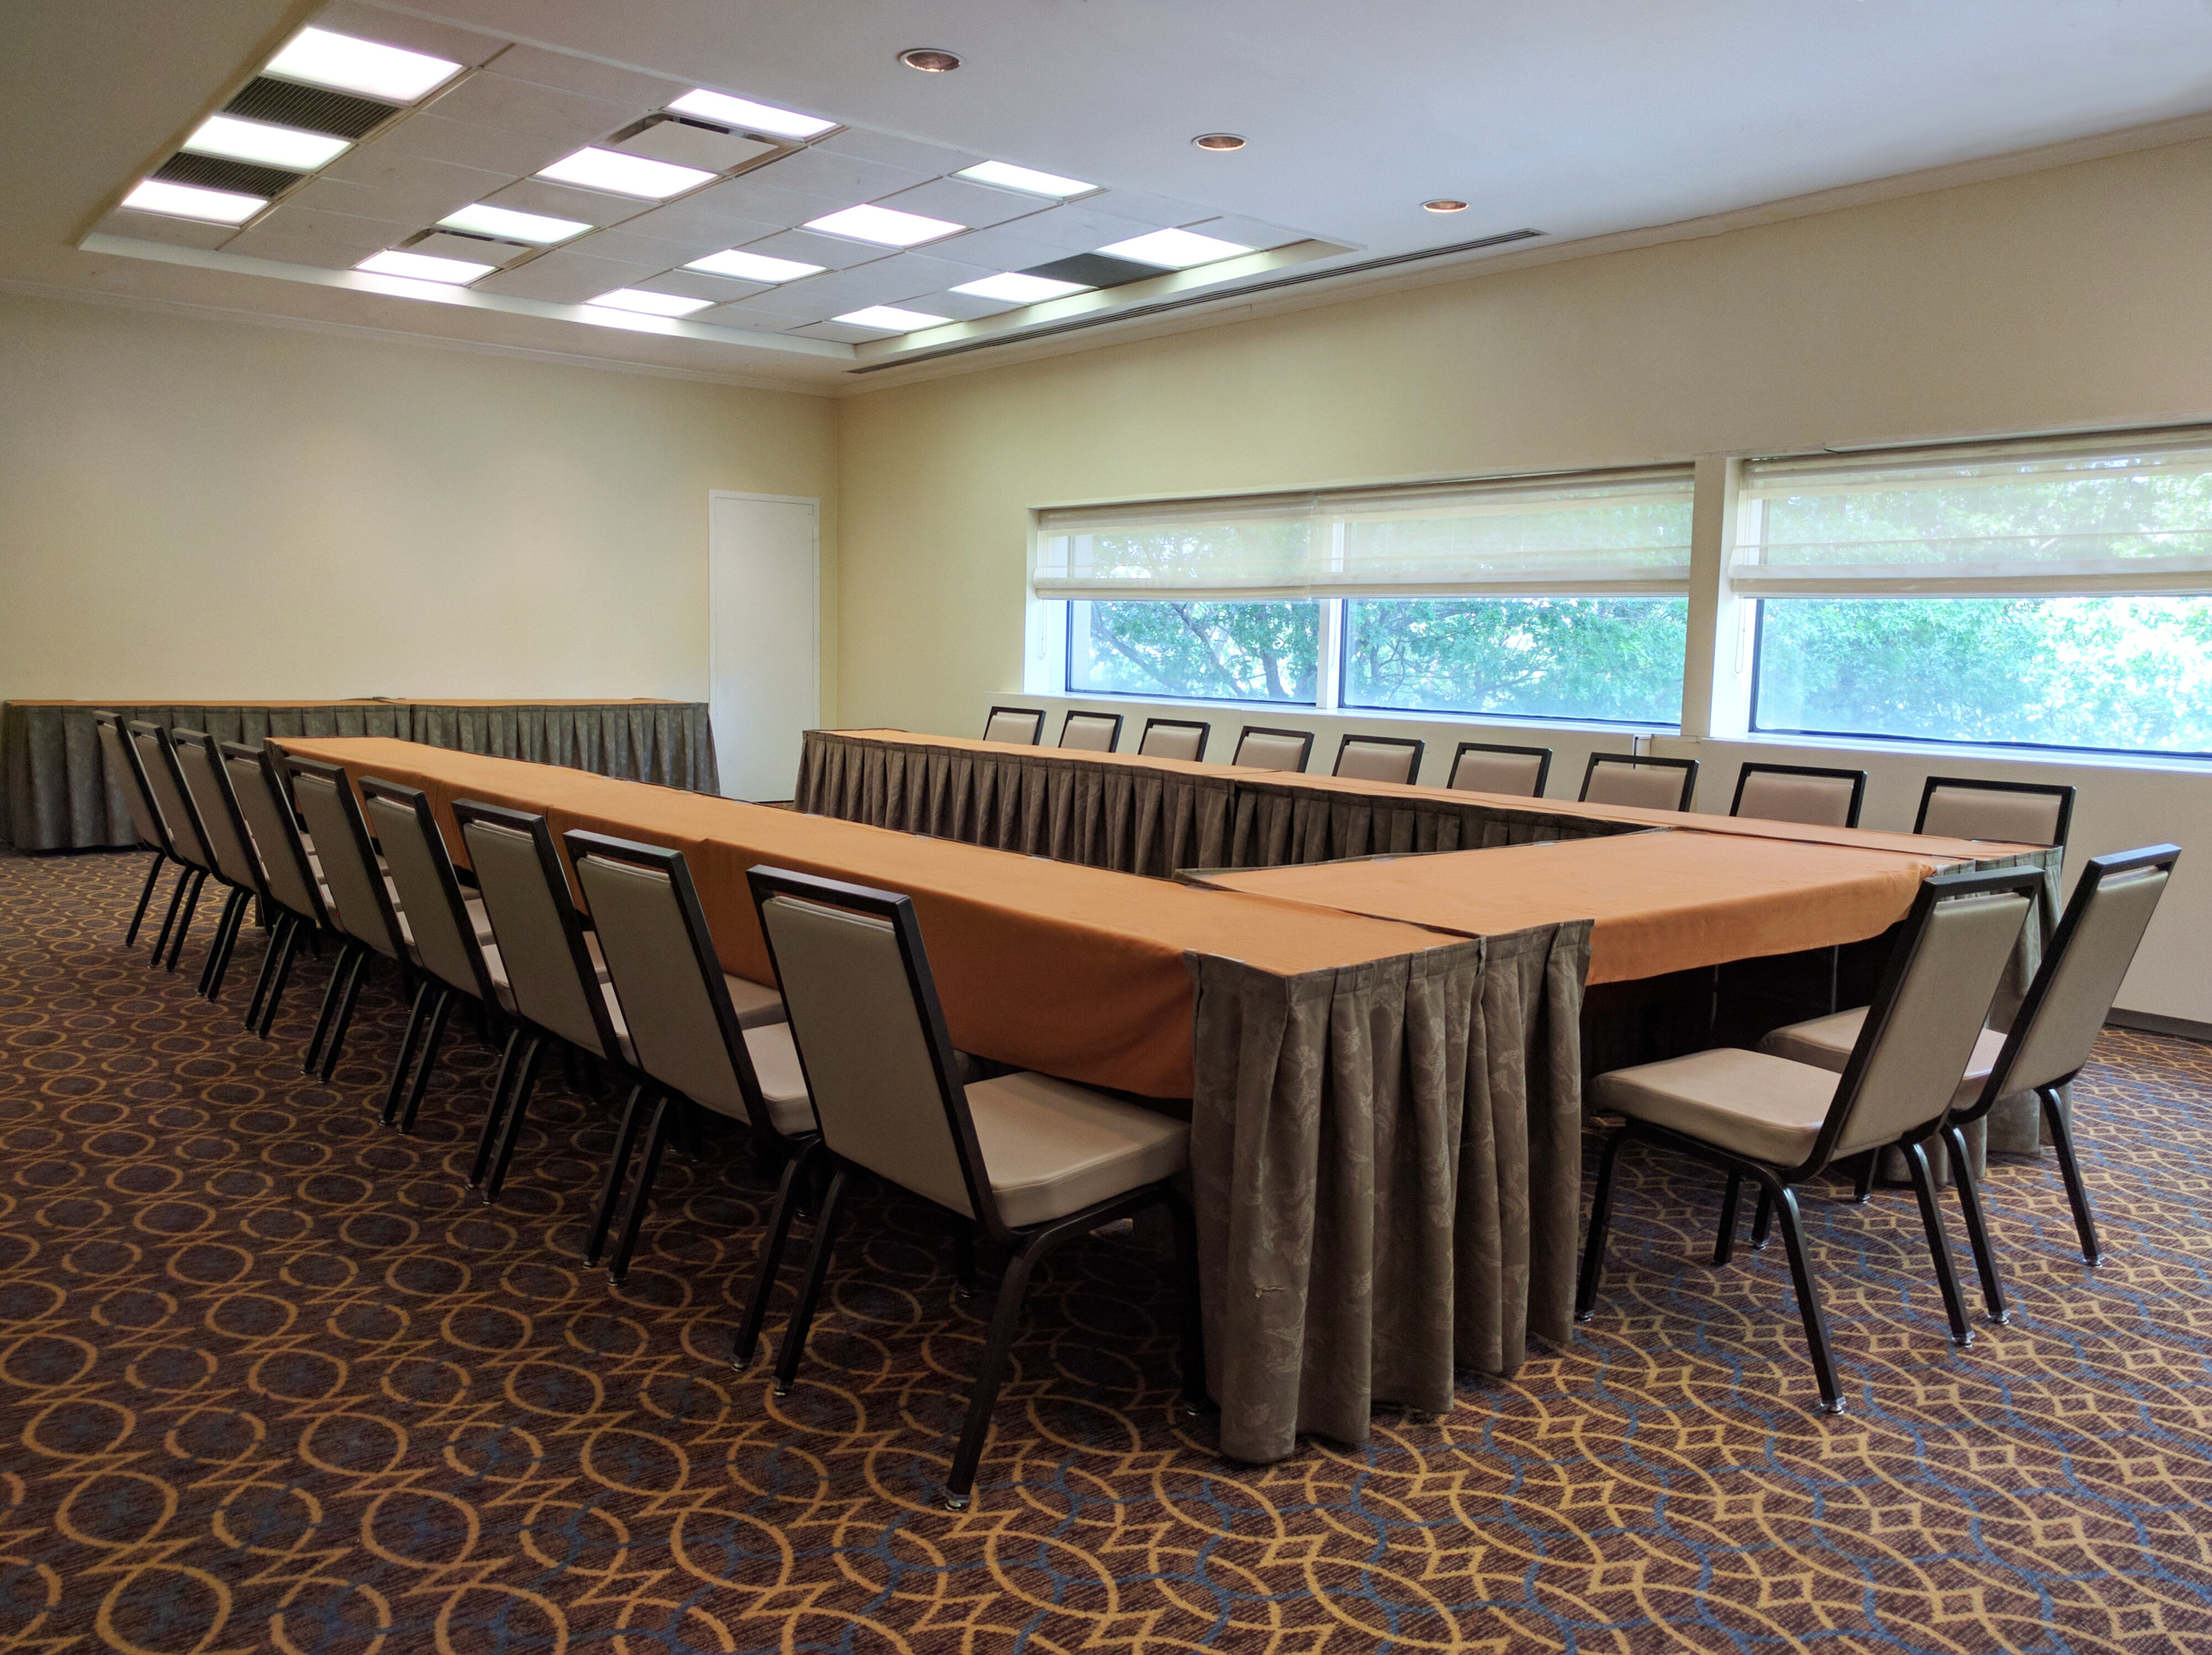 Pimlico/Belmont meeting room with u shape table setup